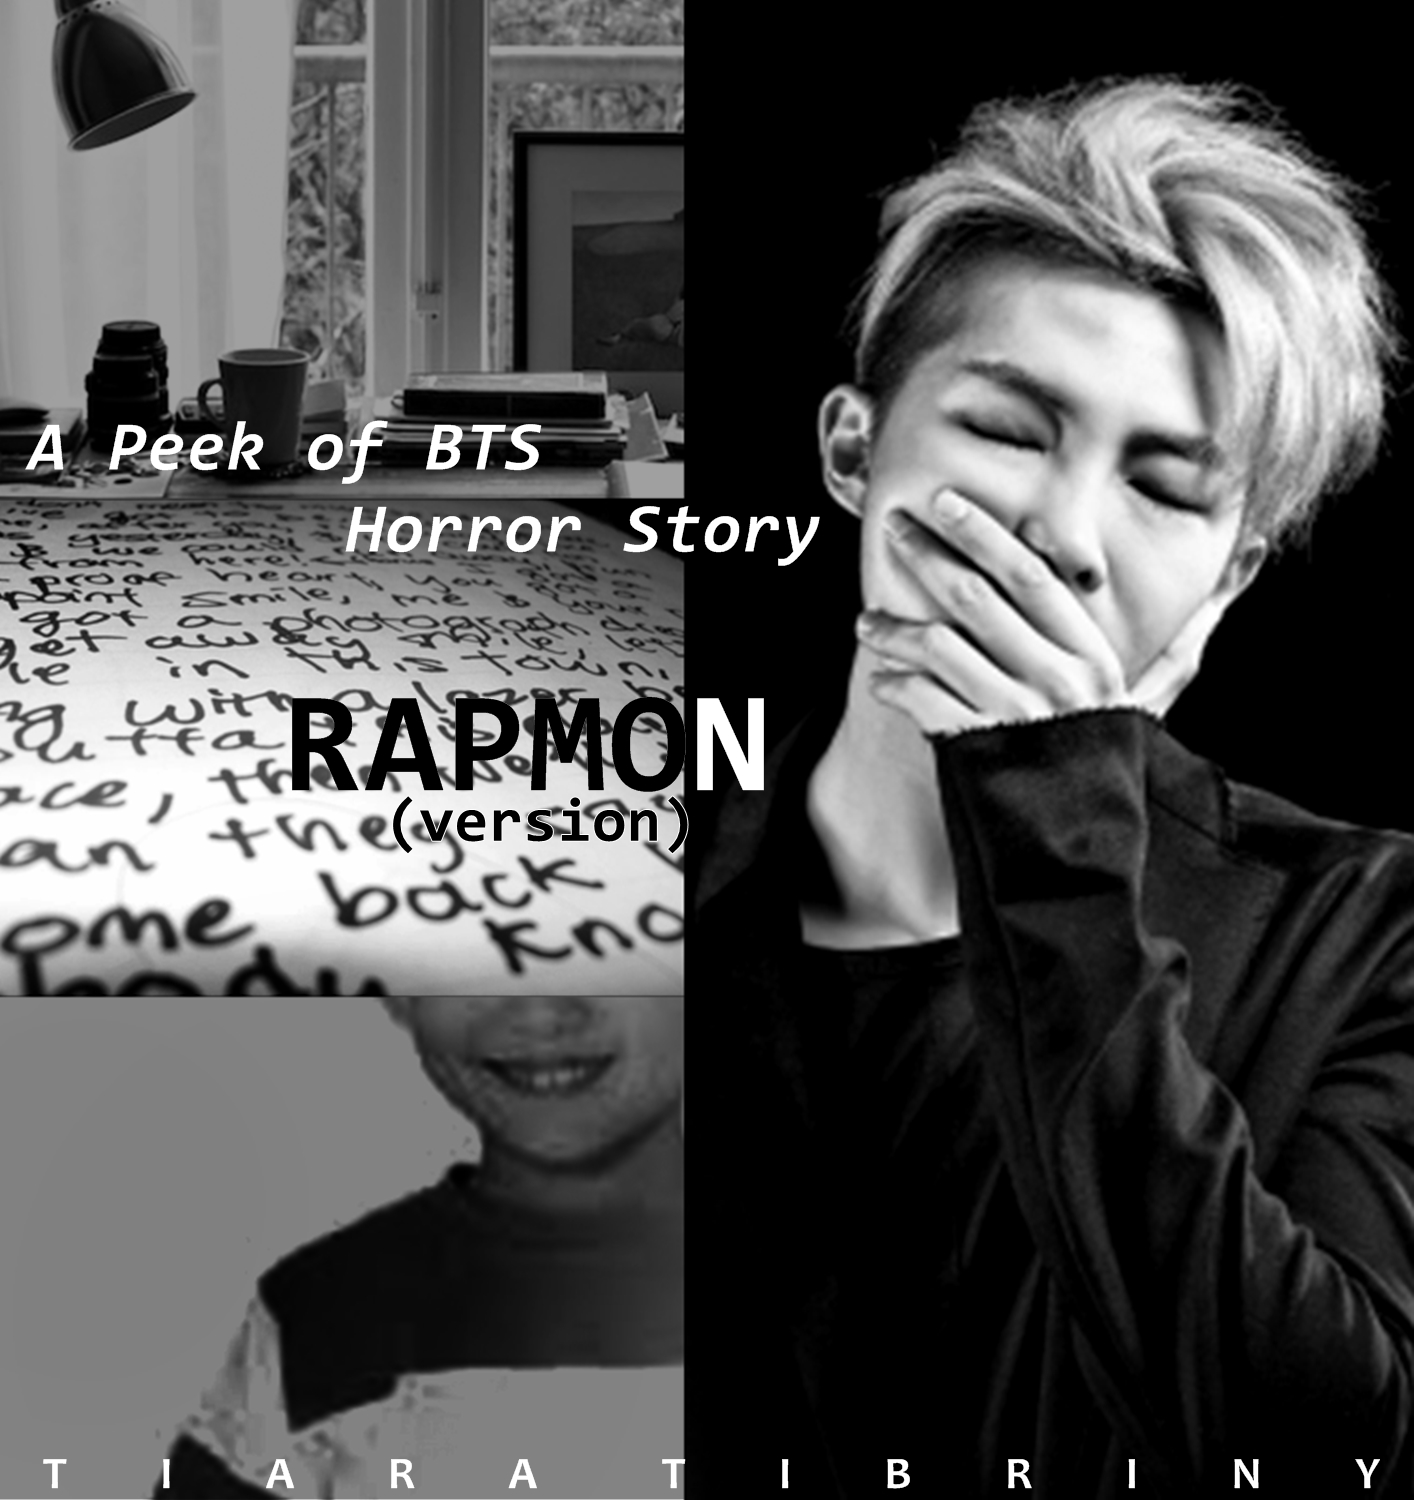 [BTS FF Freelance] A Peek of BTS Horror Story Ficlet Series RAPMON